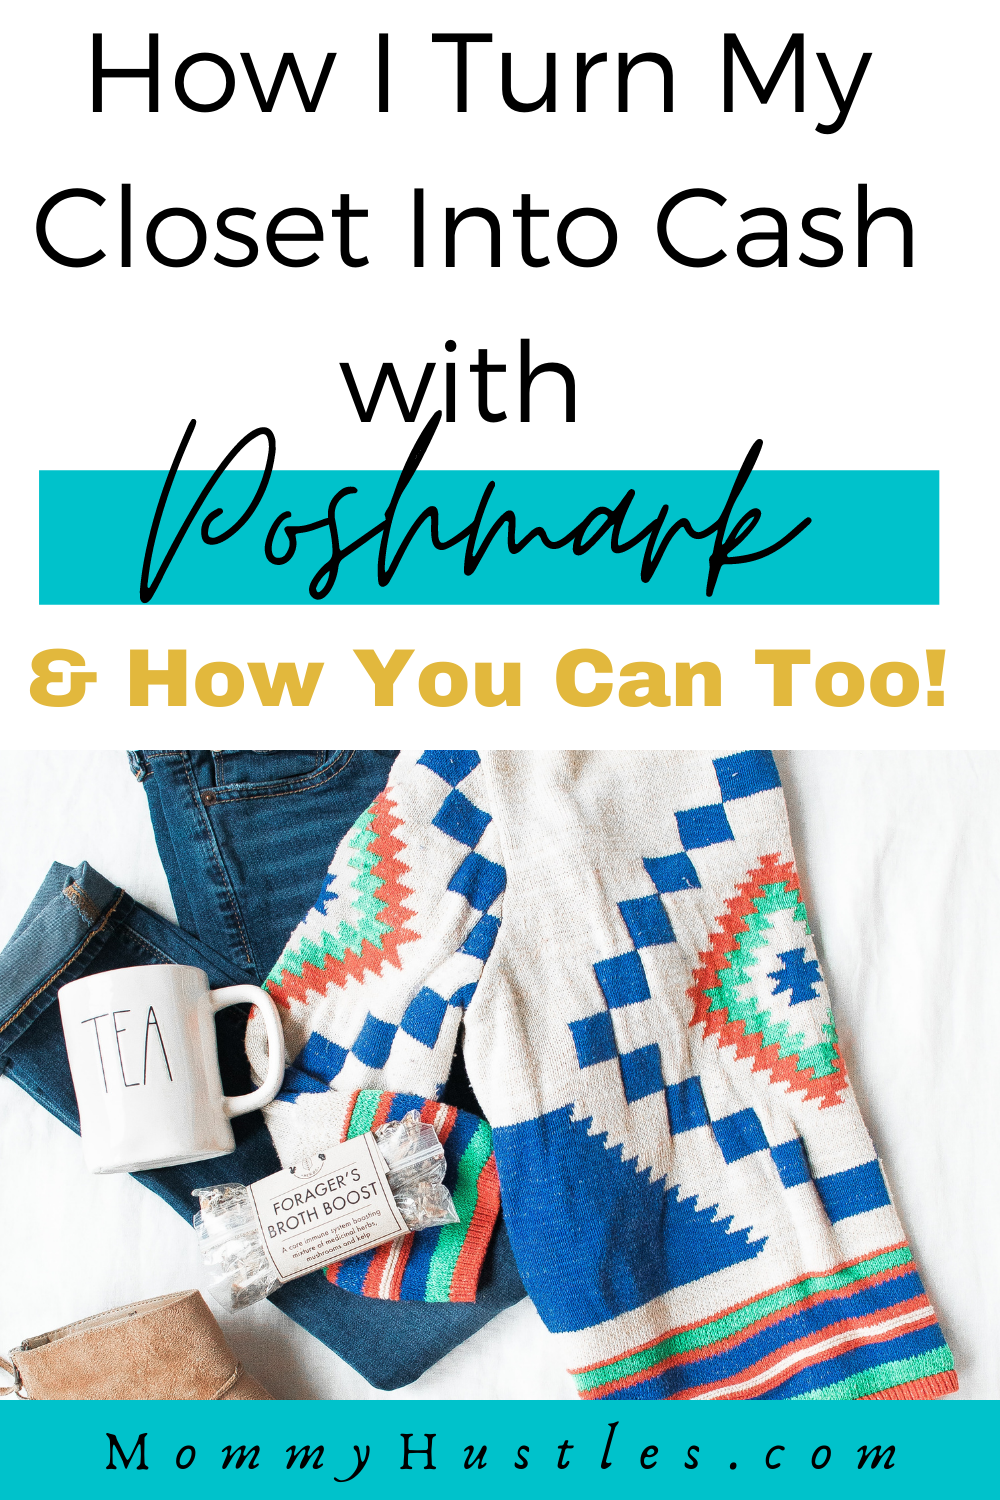 How I Turn My Closet into Cash on Poshmark